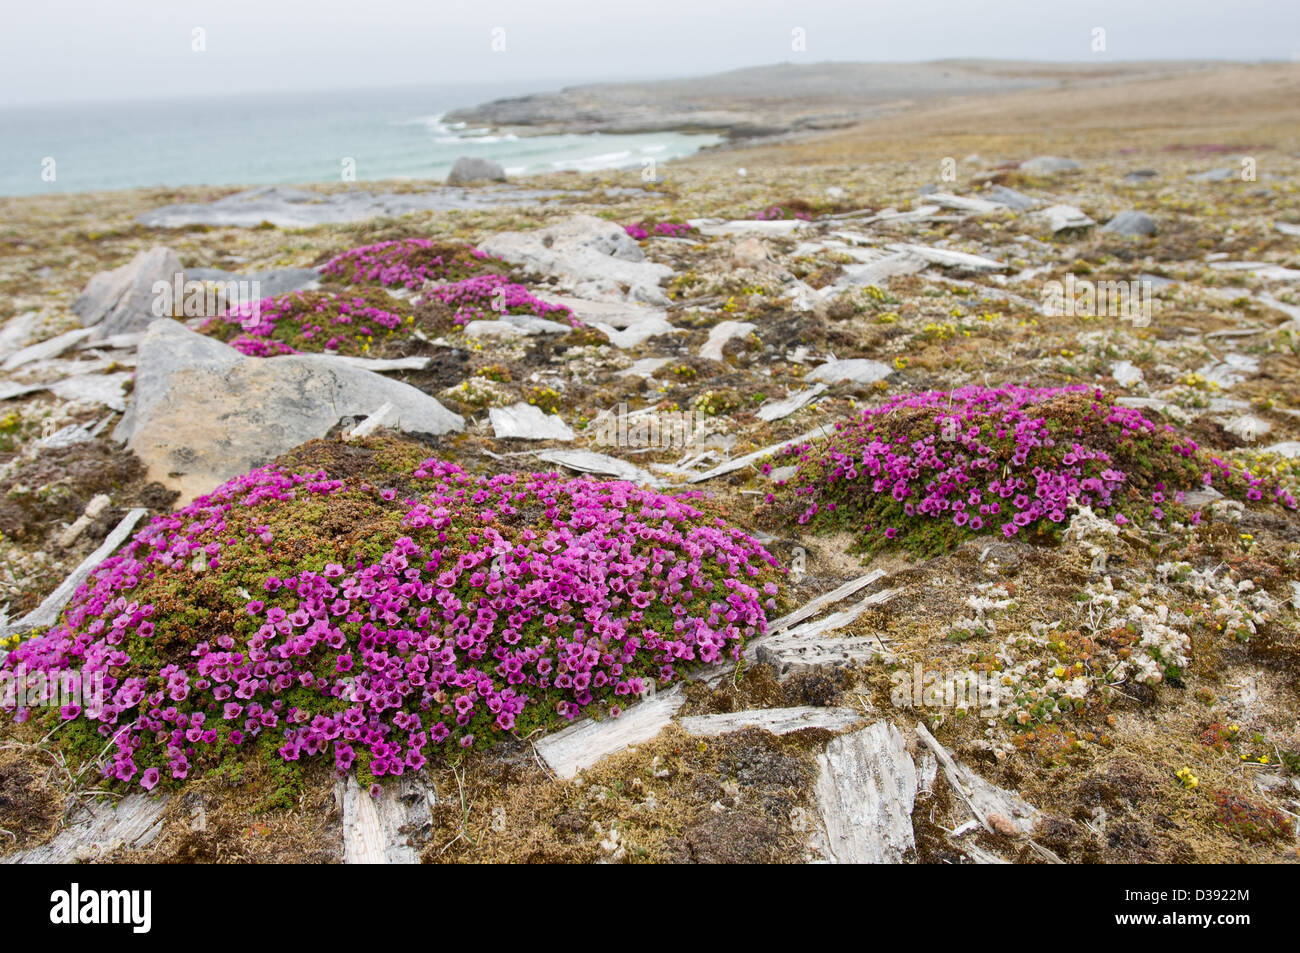 Purple saxifrage (Saxifraga oppositifolia) flowering amidst wooden remnants, Valrossbukta, Bear Island (Bjørnøya), Svalbard Archipelago, Norway Stock Photo